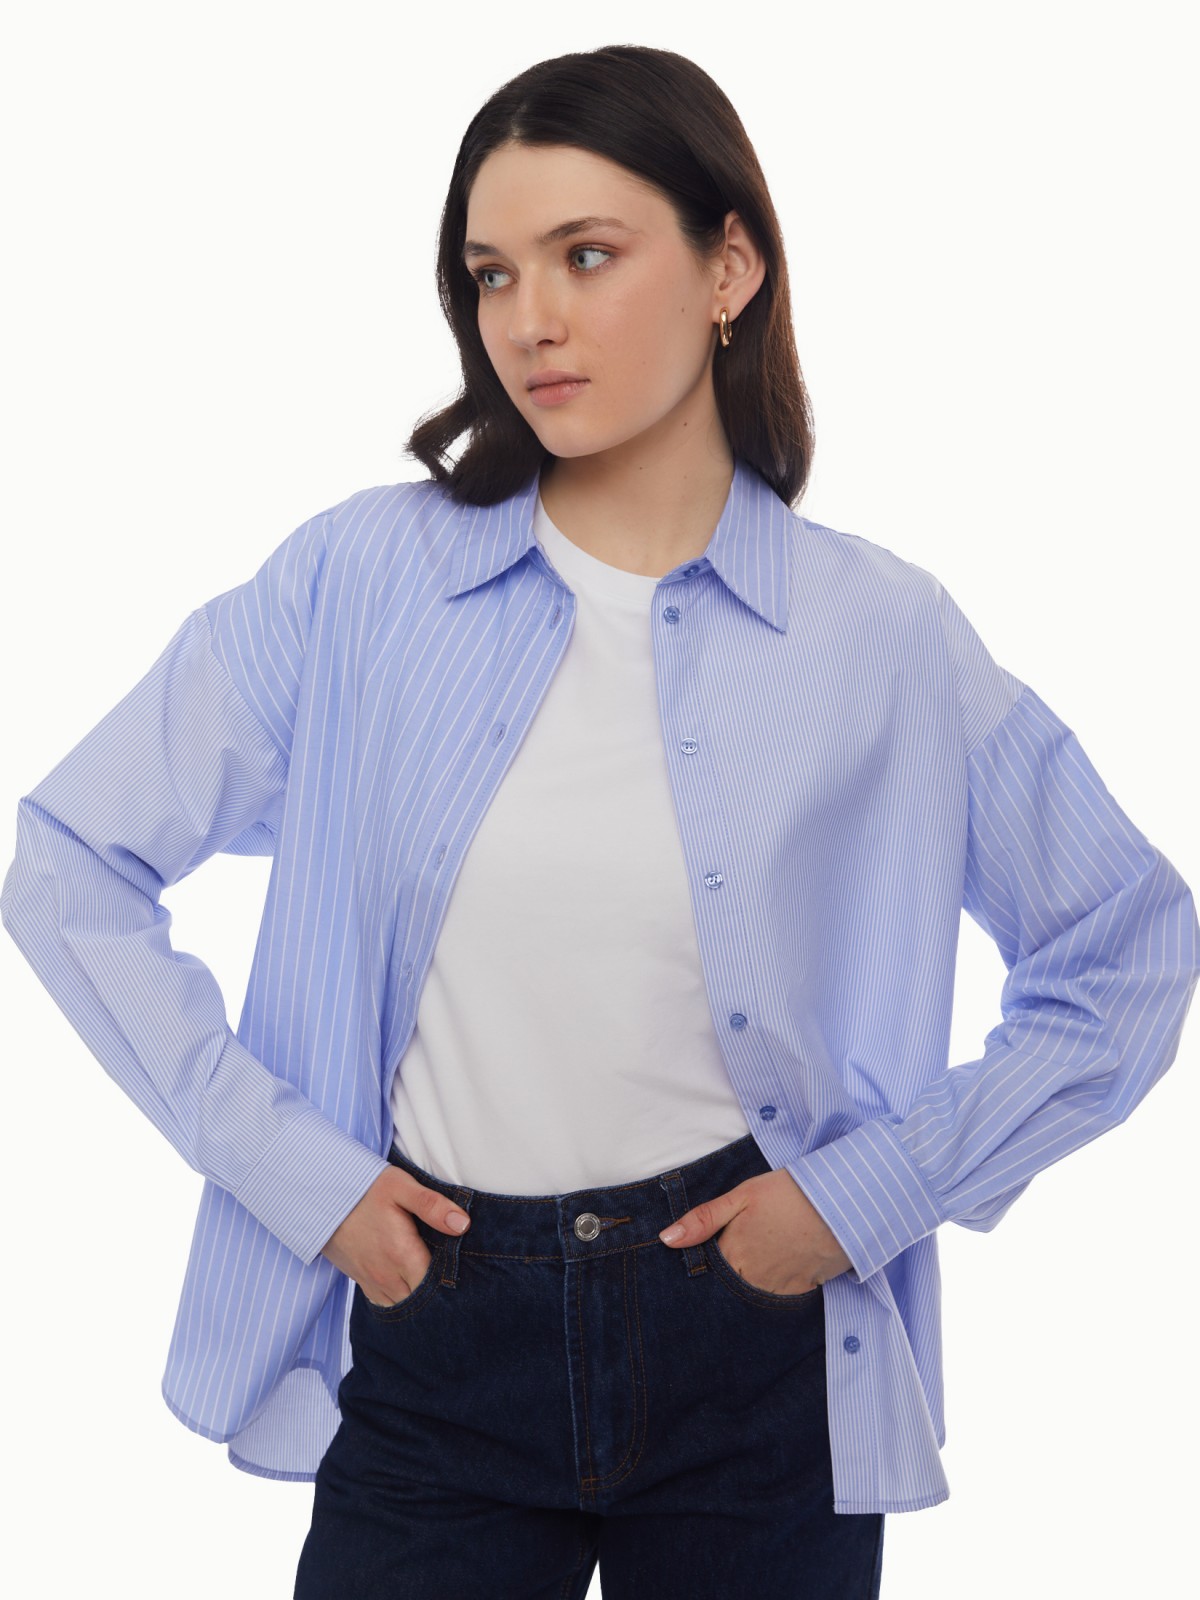 Рубашка оверсайз силуэта с узором в полоску zolla 024131159342, цвет светло-голубой, размер XS - фото 2